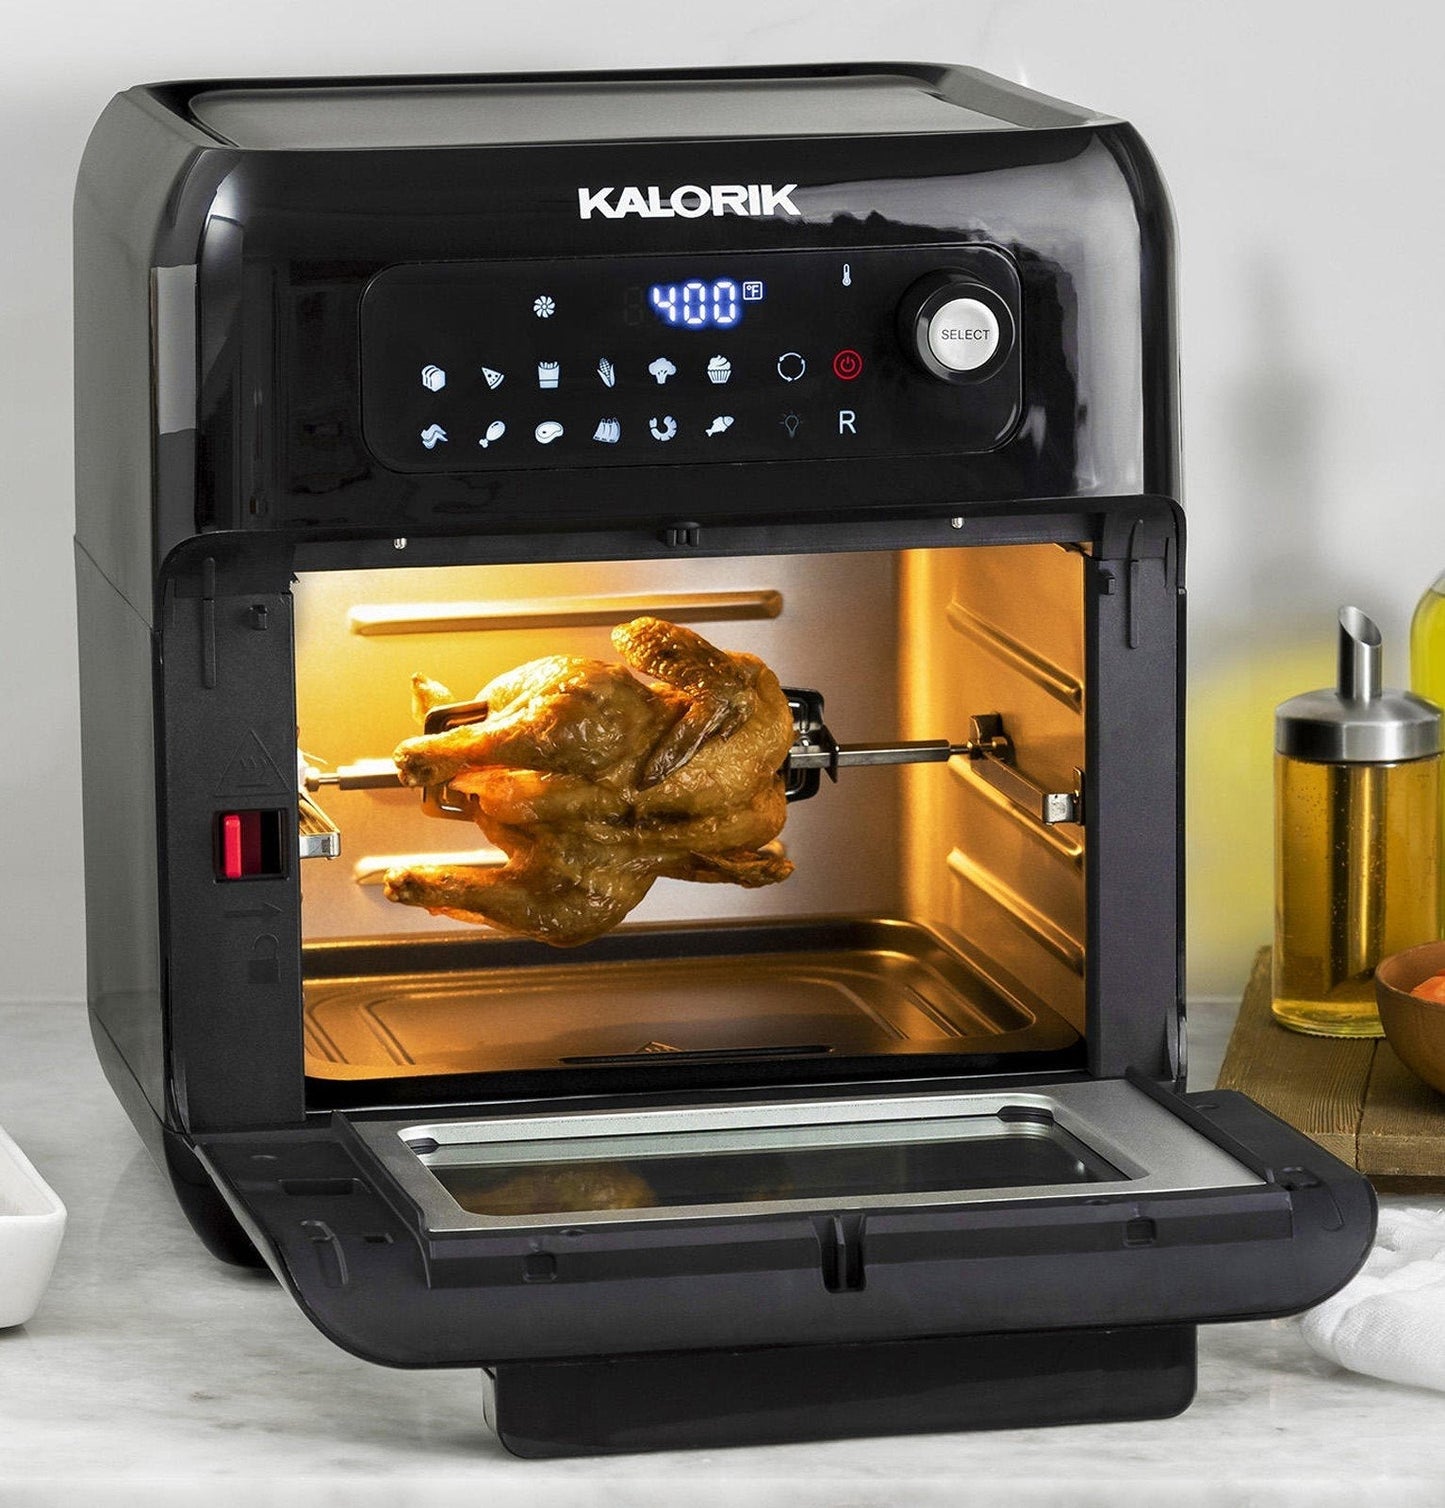 Kalorik 6 Quart Air Fryer Oven with Accessories Multicooker Recipe Book